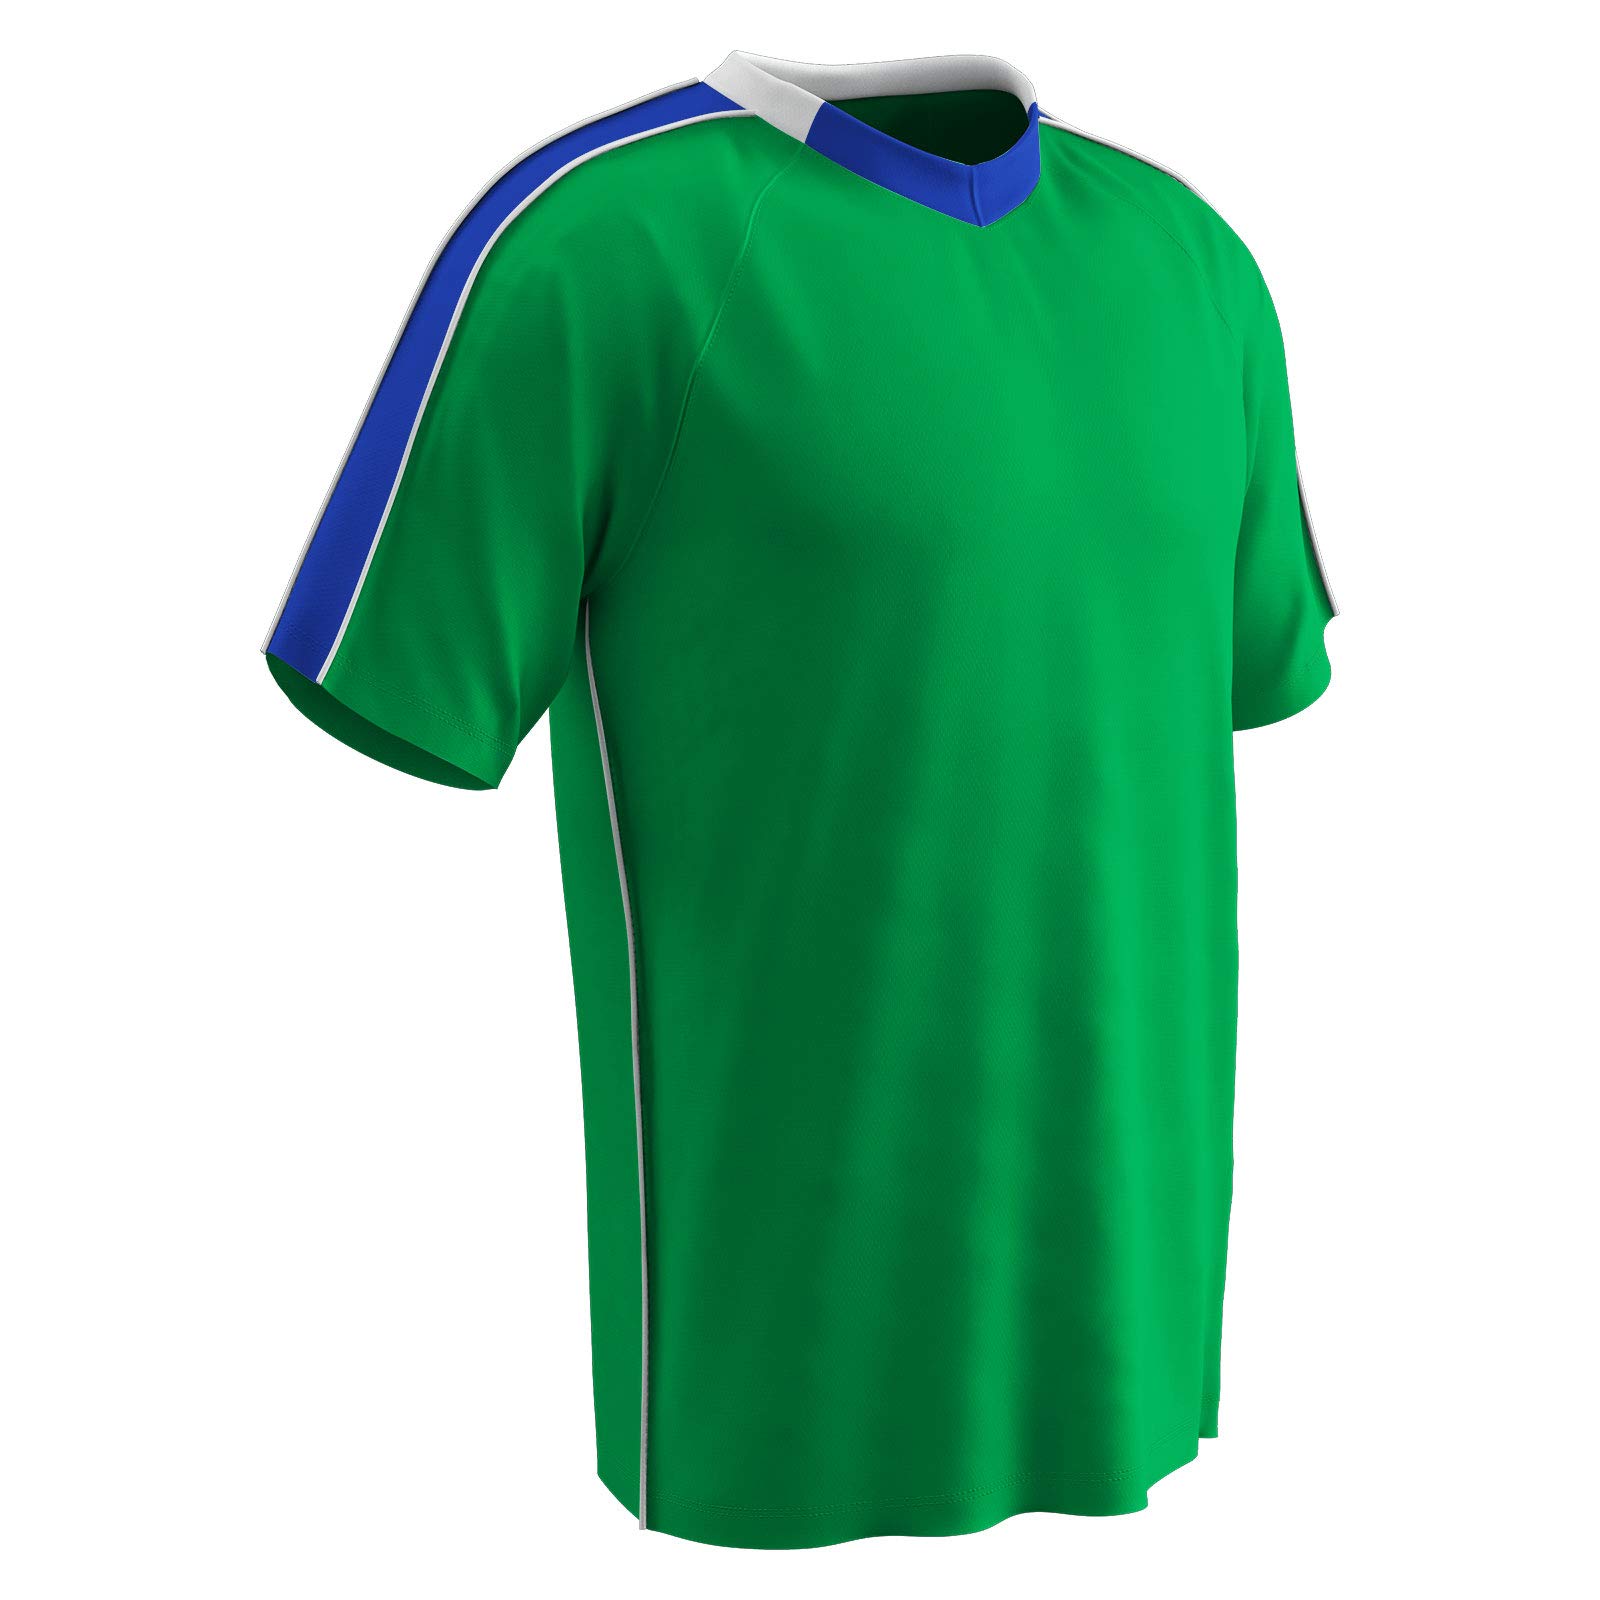 Champro Mark Lightweight Youth Soccer Jersey, Green, Medium